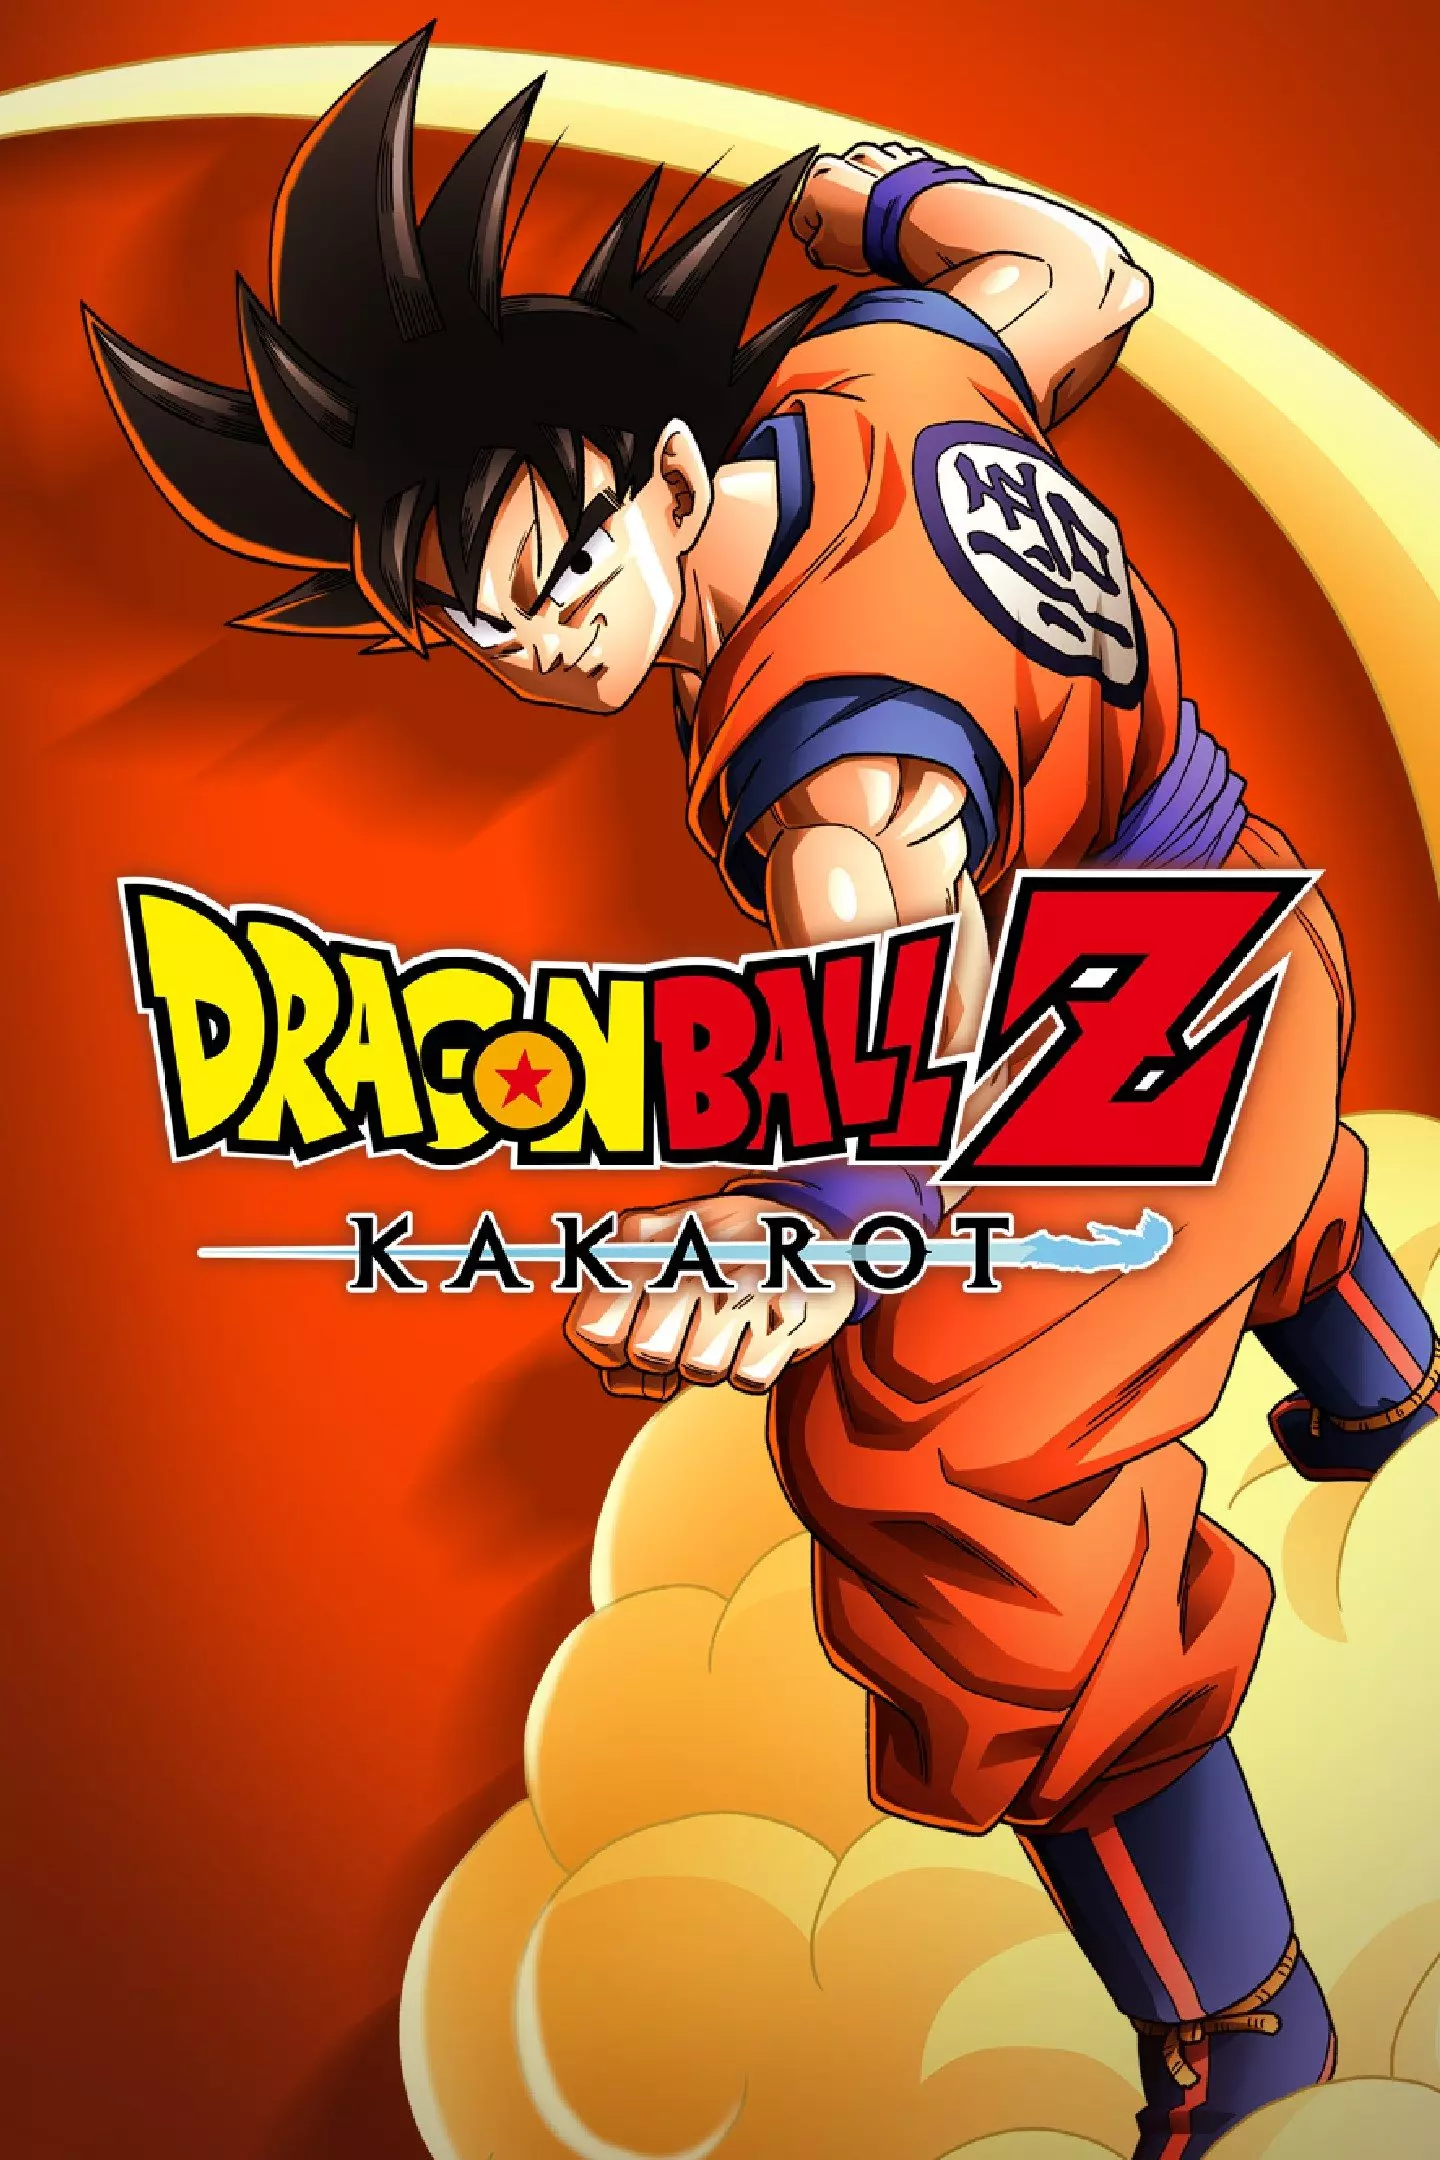 Dragon Ball Z: Kakarot - это ролевая игра с открытым миром, разработанная CyberConnect2 и выпущенная Bandai Namco Entertainment.